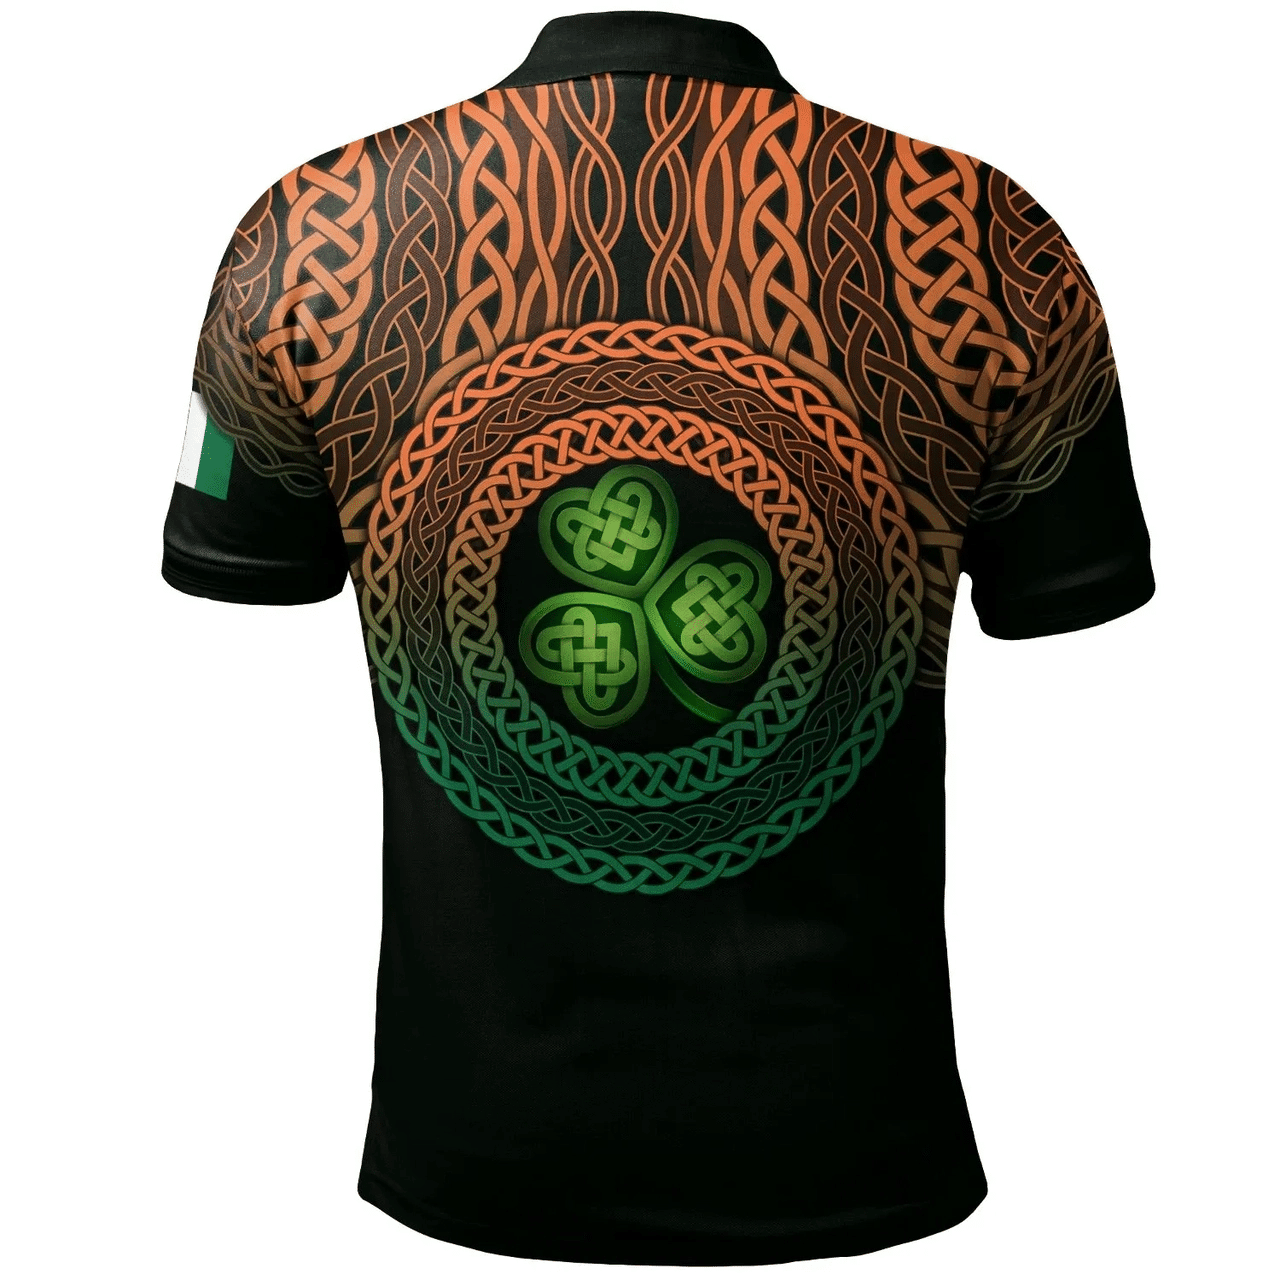 1stIreland Ireland Polo Shirt - Malley or O'Malley Irish Family Crest Polo Shirt - Celtic Pride A7 | 1stIreland.com